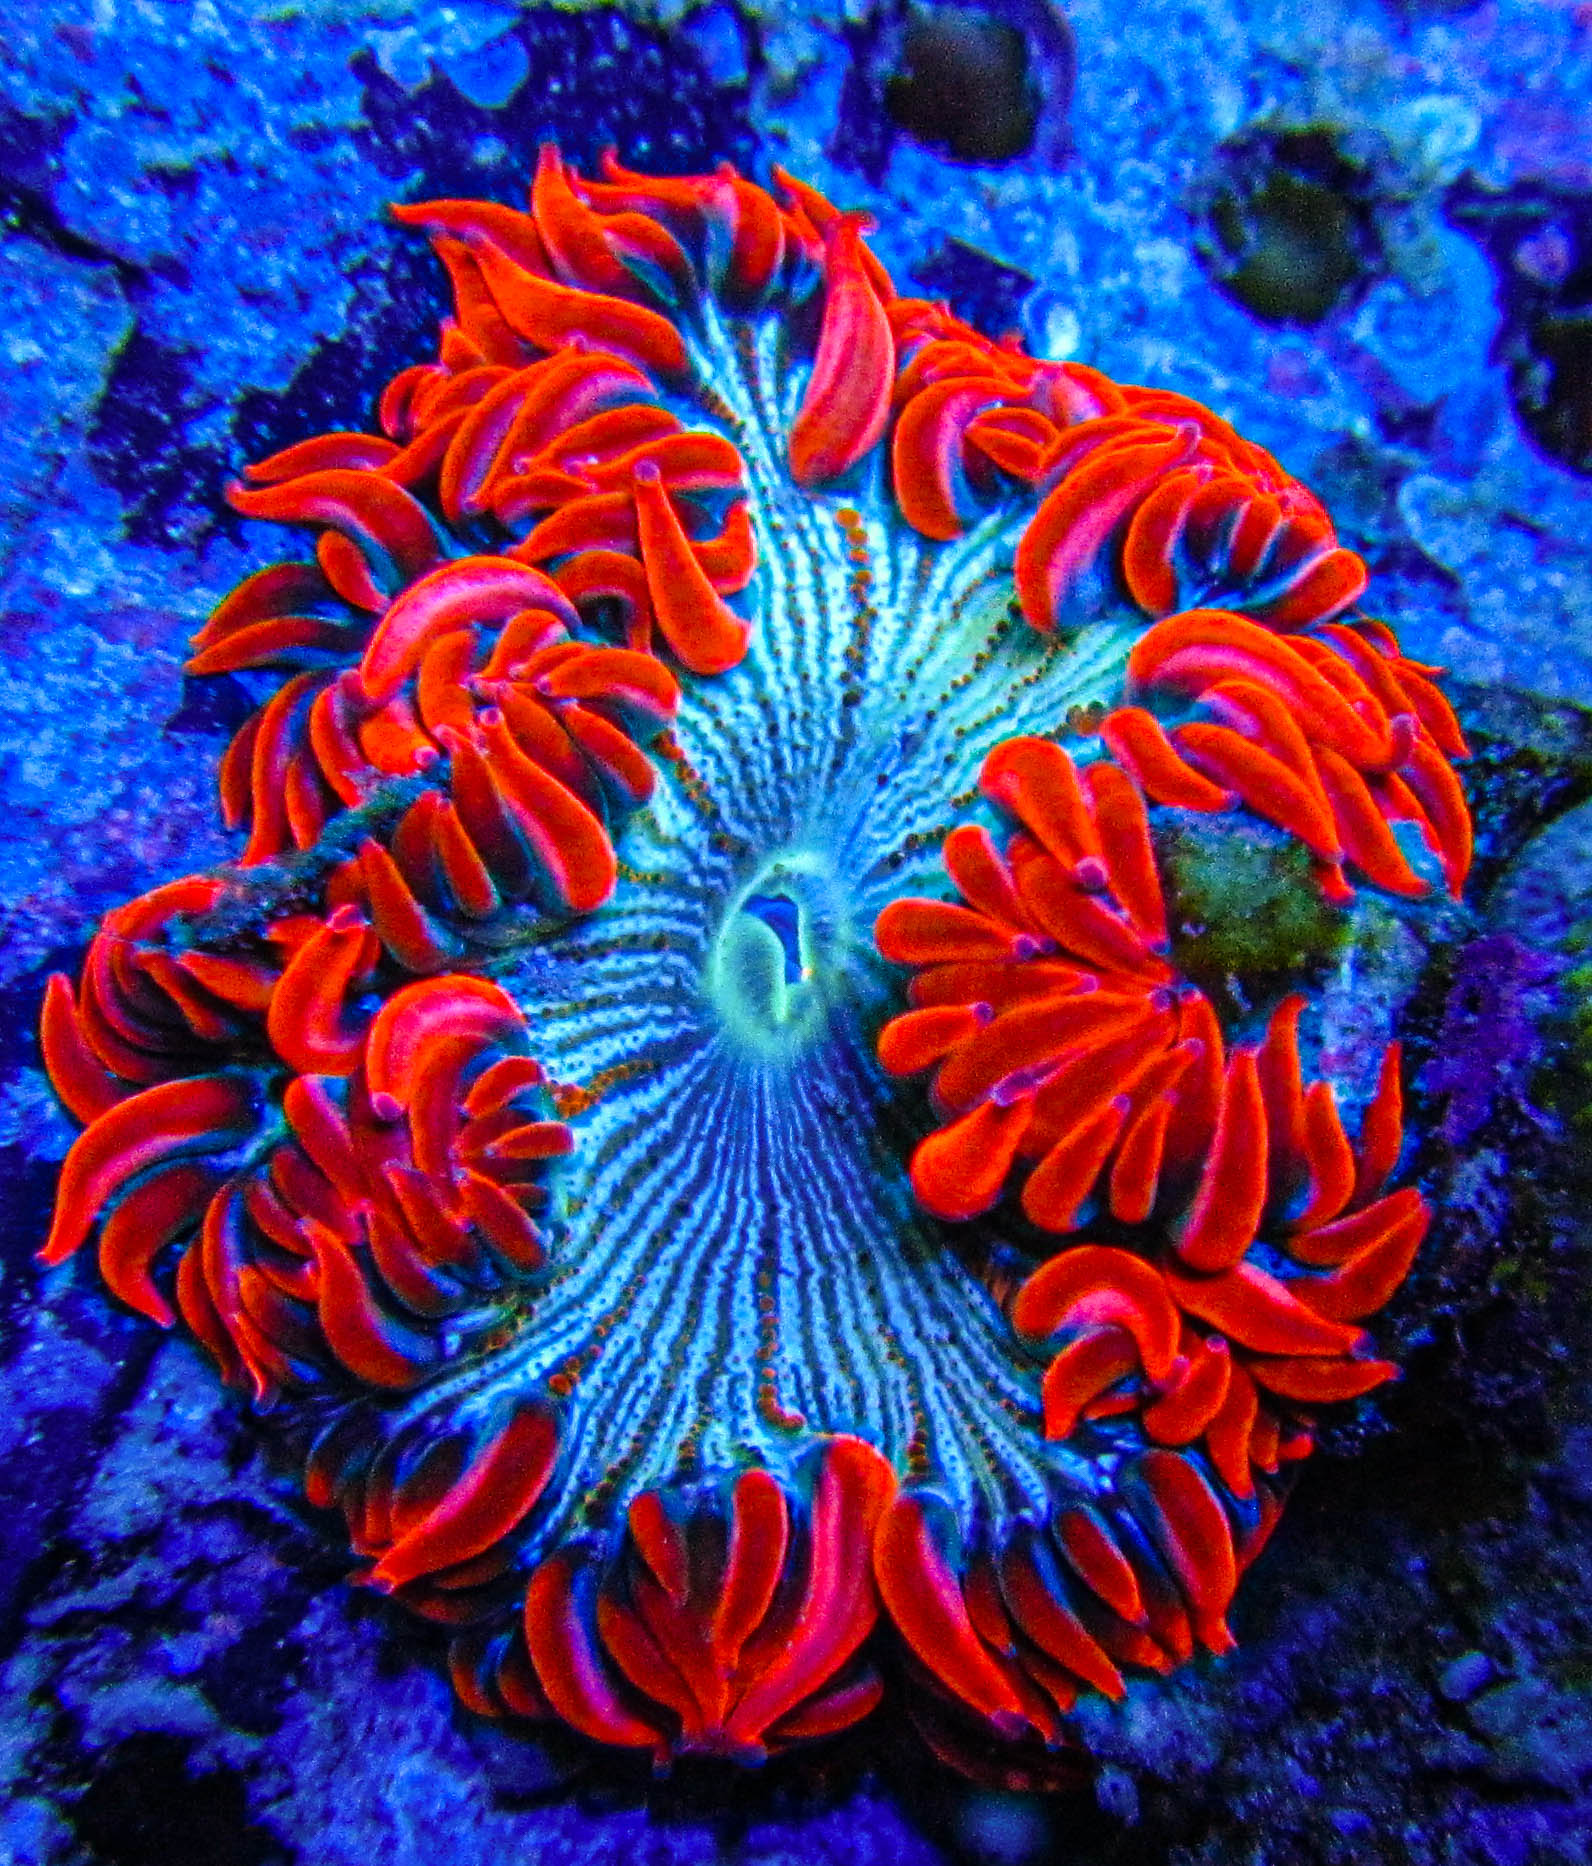 Ultra Rock Flower anemones 2734.JPG